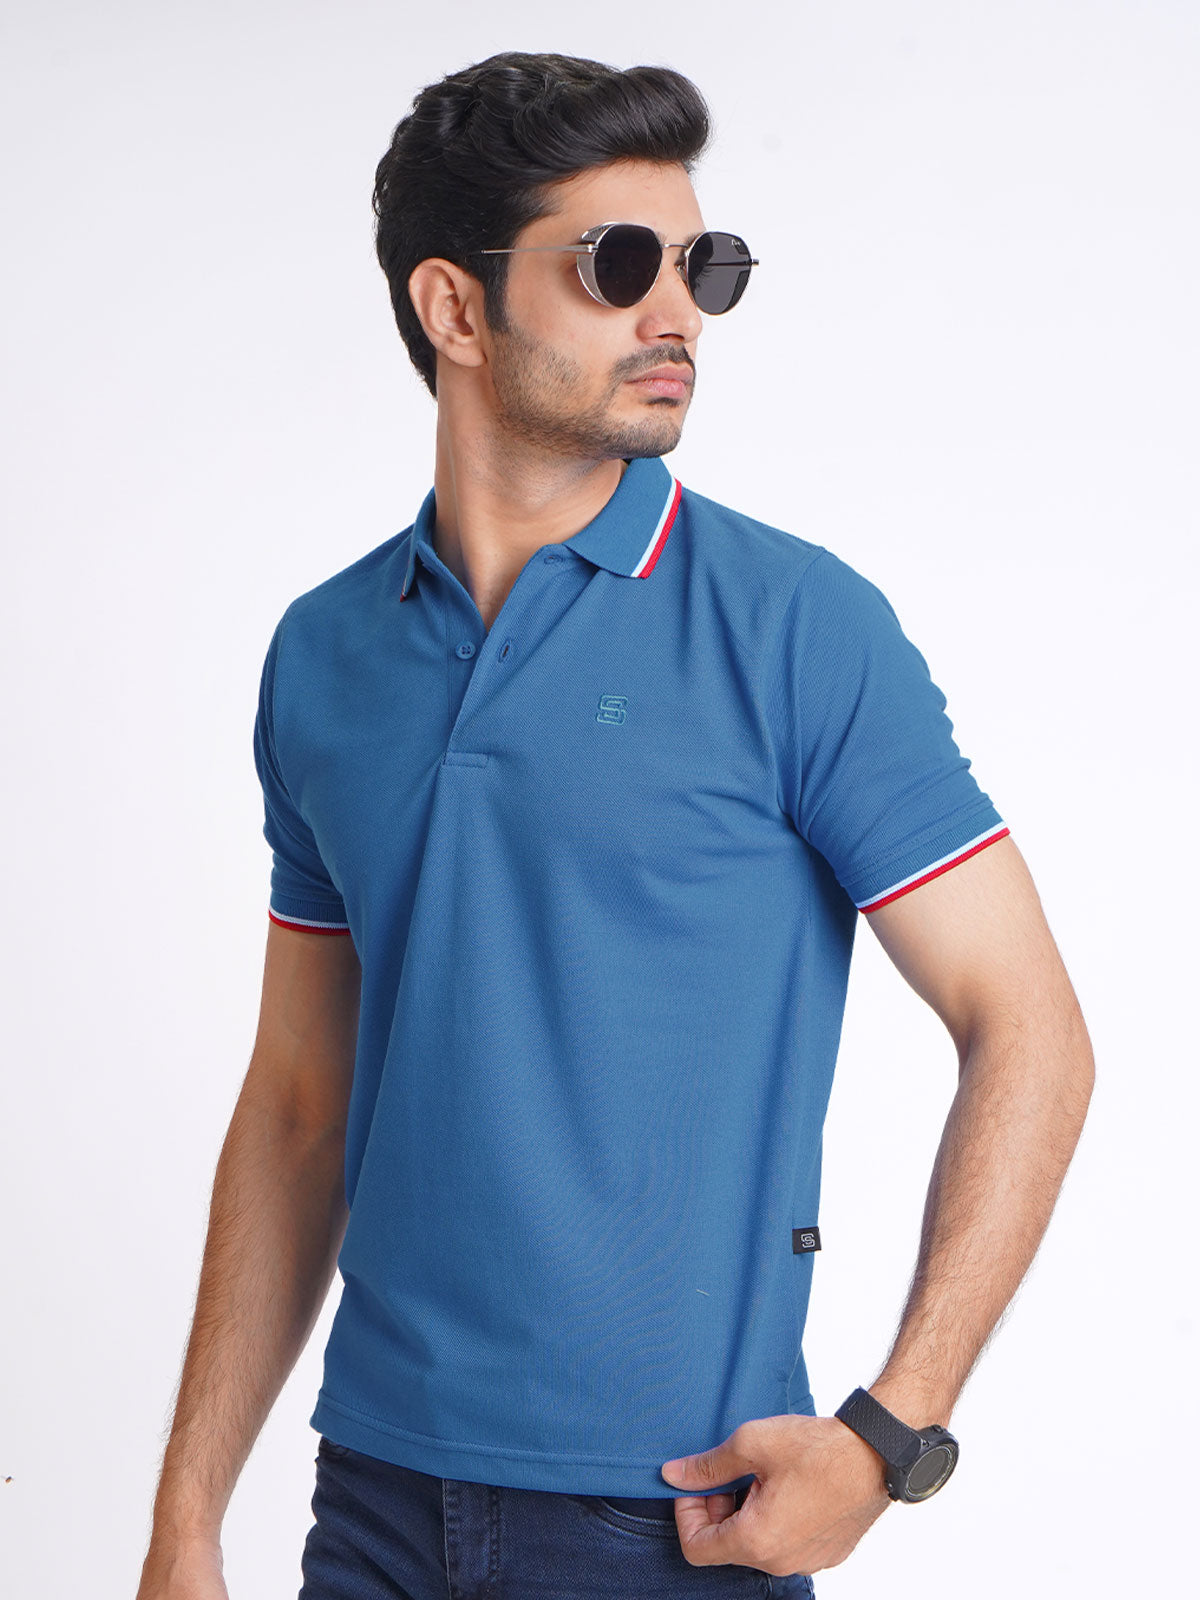 Royal Blue Plain Contrast Tipping Half Sleeves Polo T-Shirt (POLO-594)